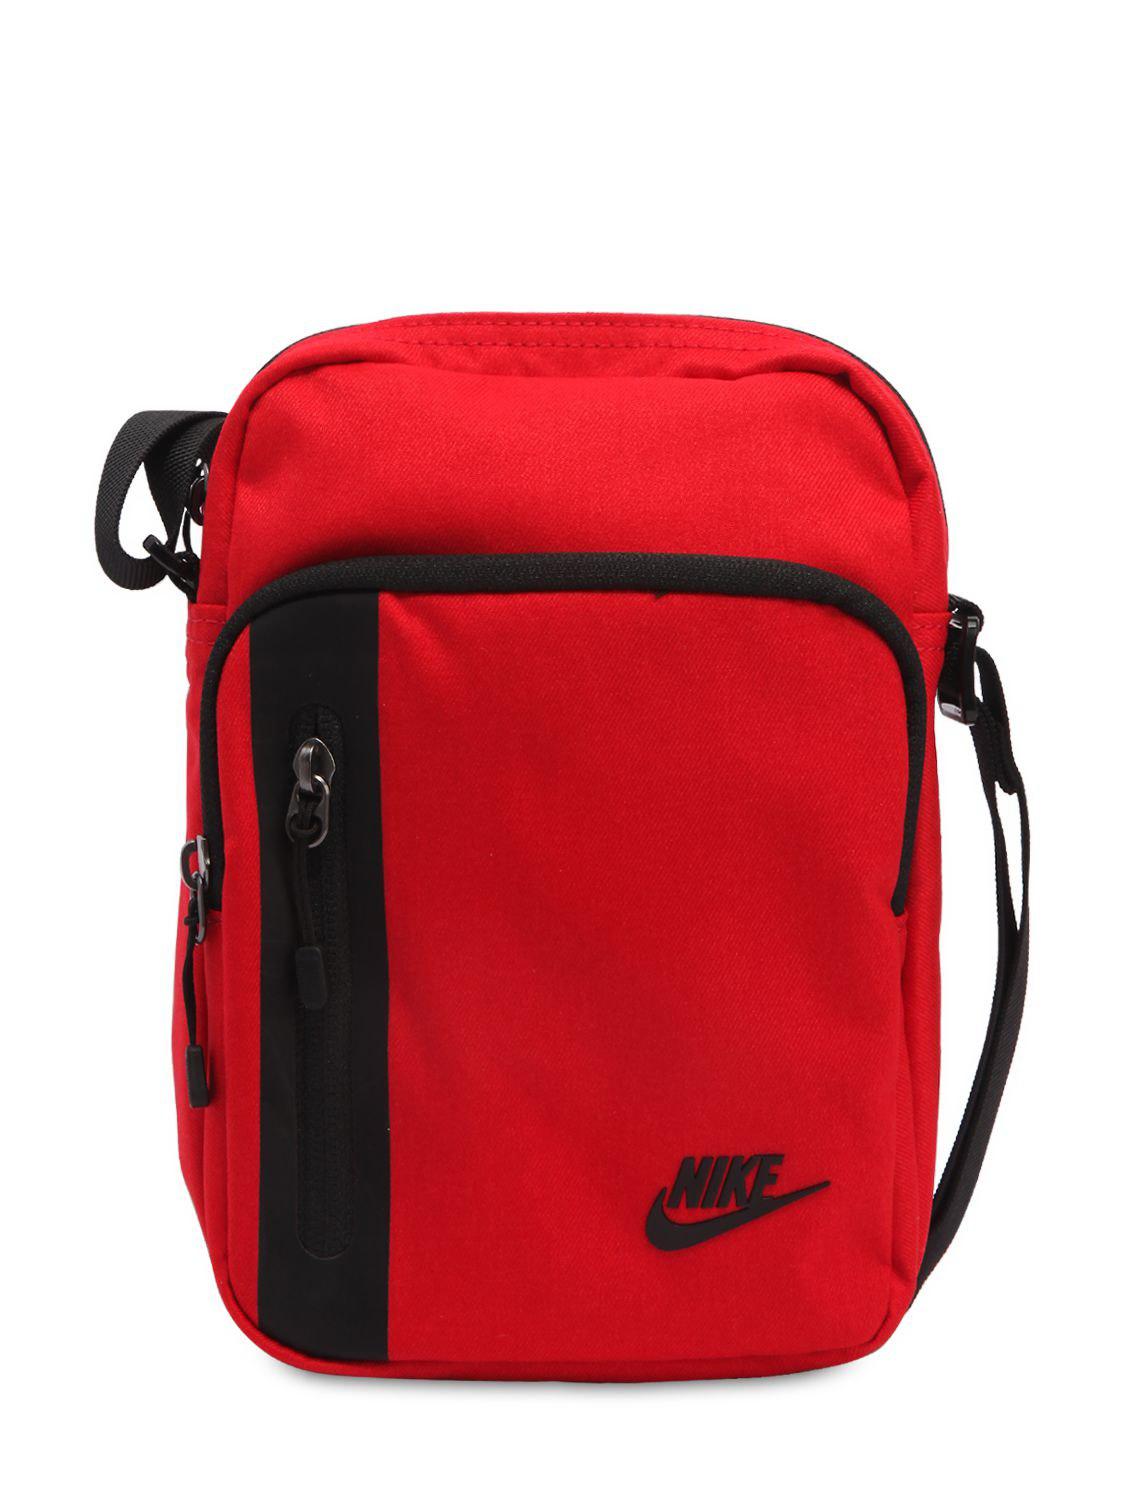 Nike Synthetic Tech Crossbody Bag in 